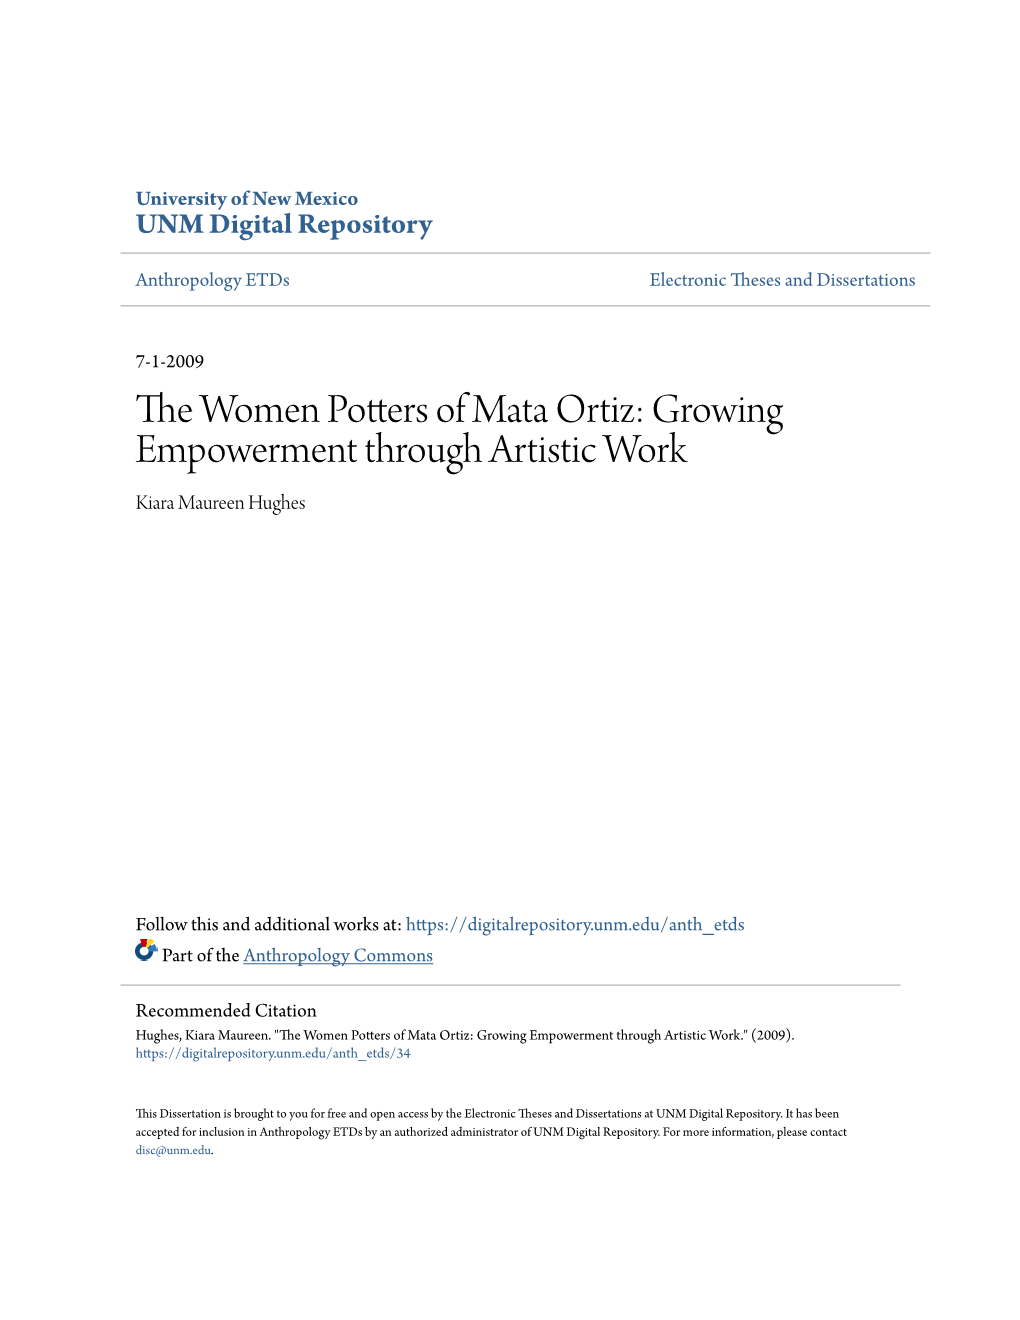 The Women Potters of Mata Ortiz: Growing